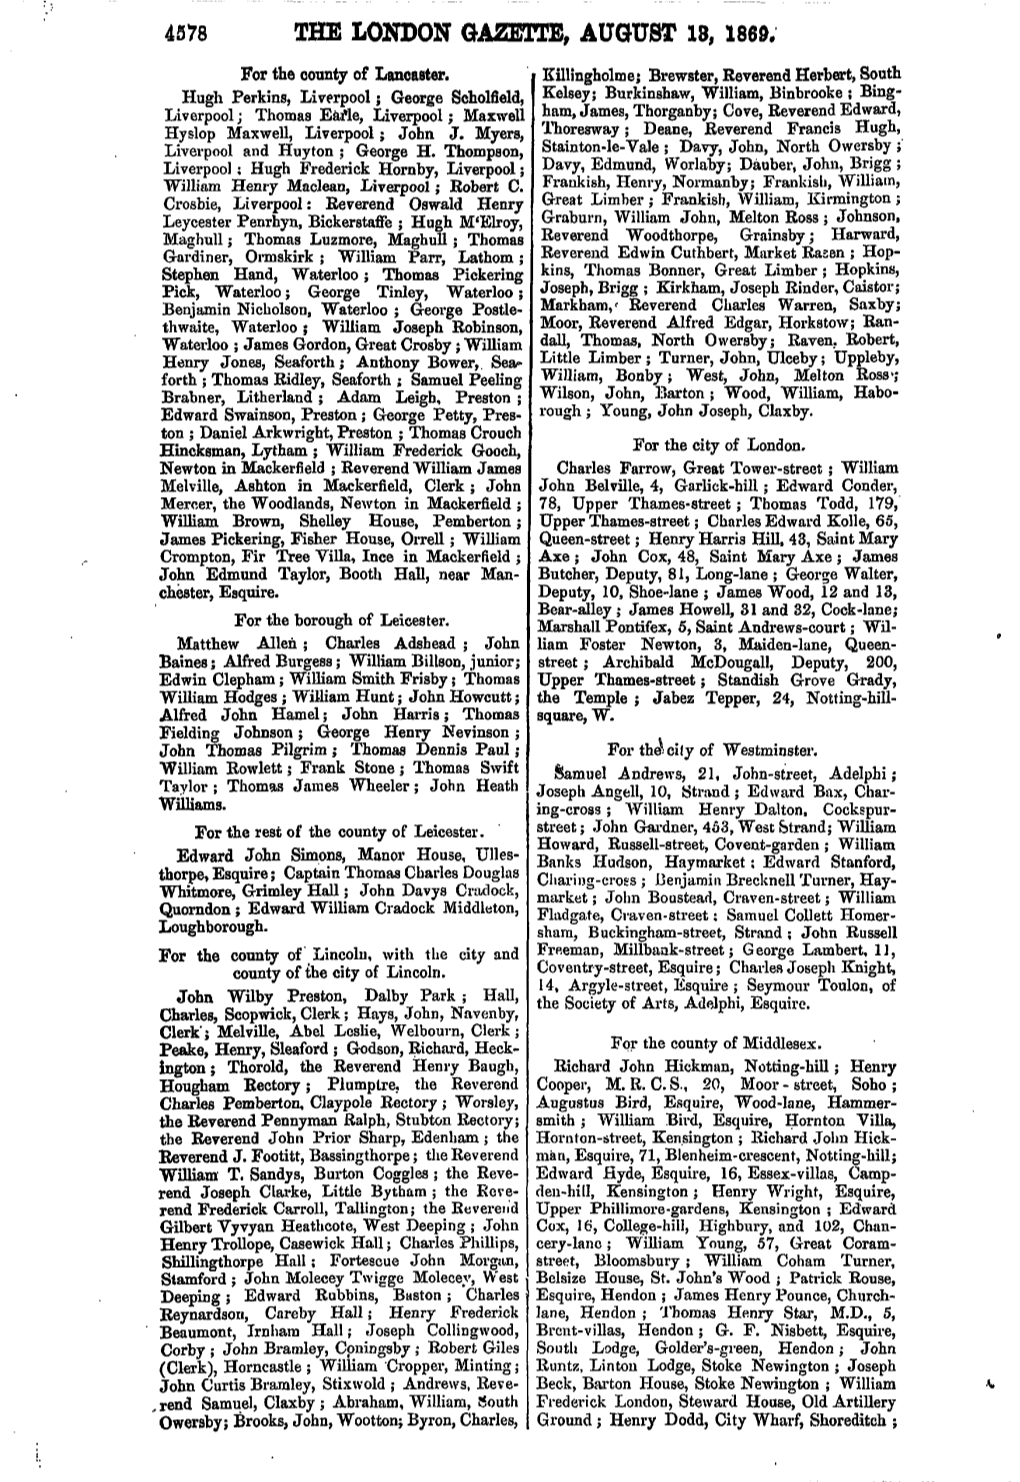 The London Gazette, August 13, 1869